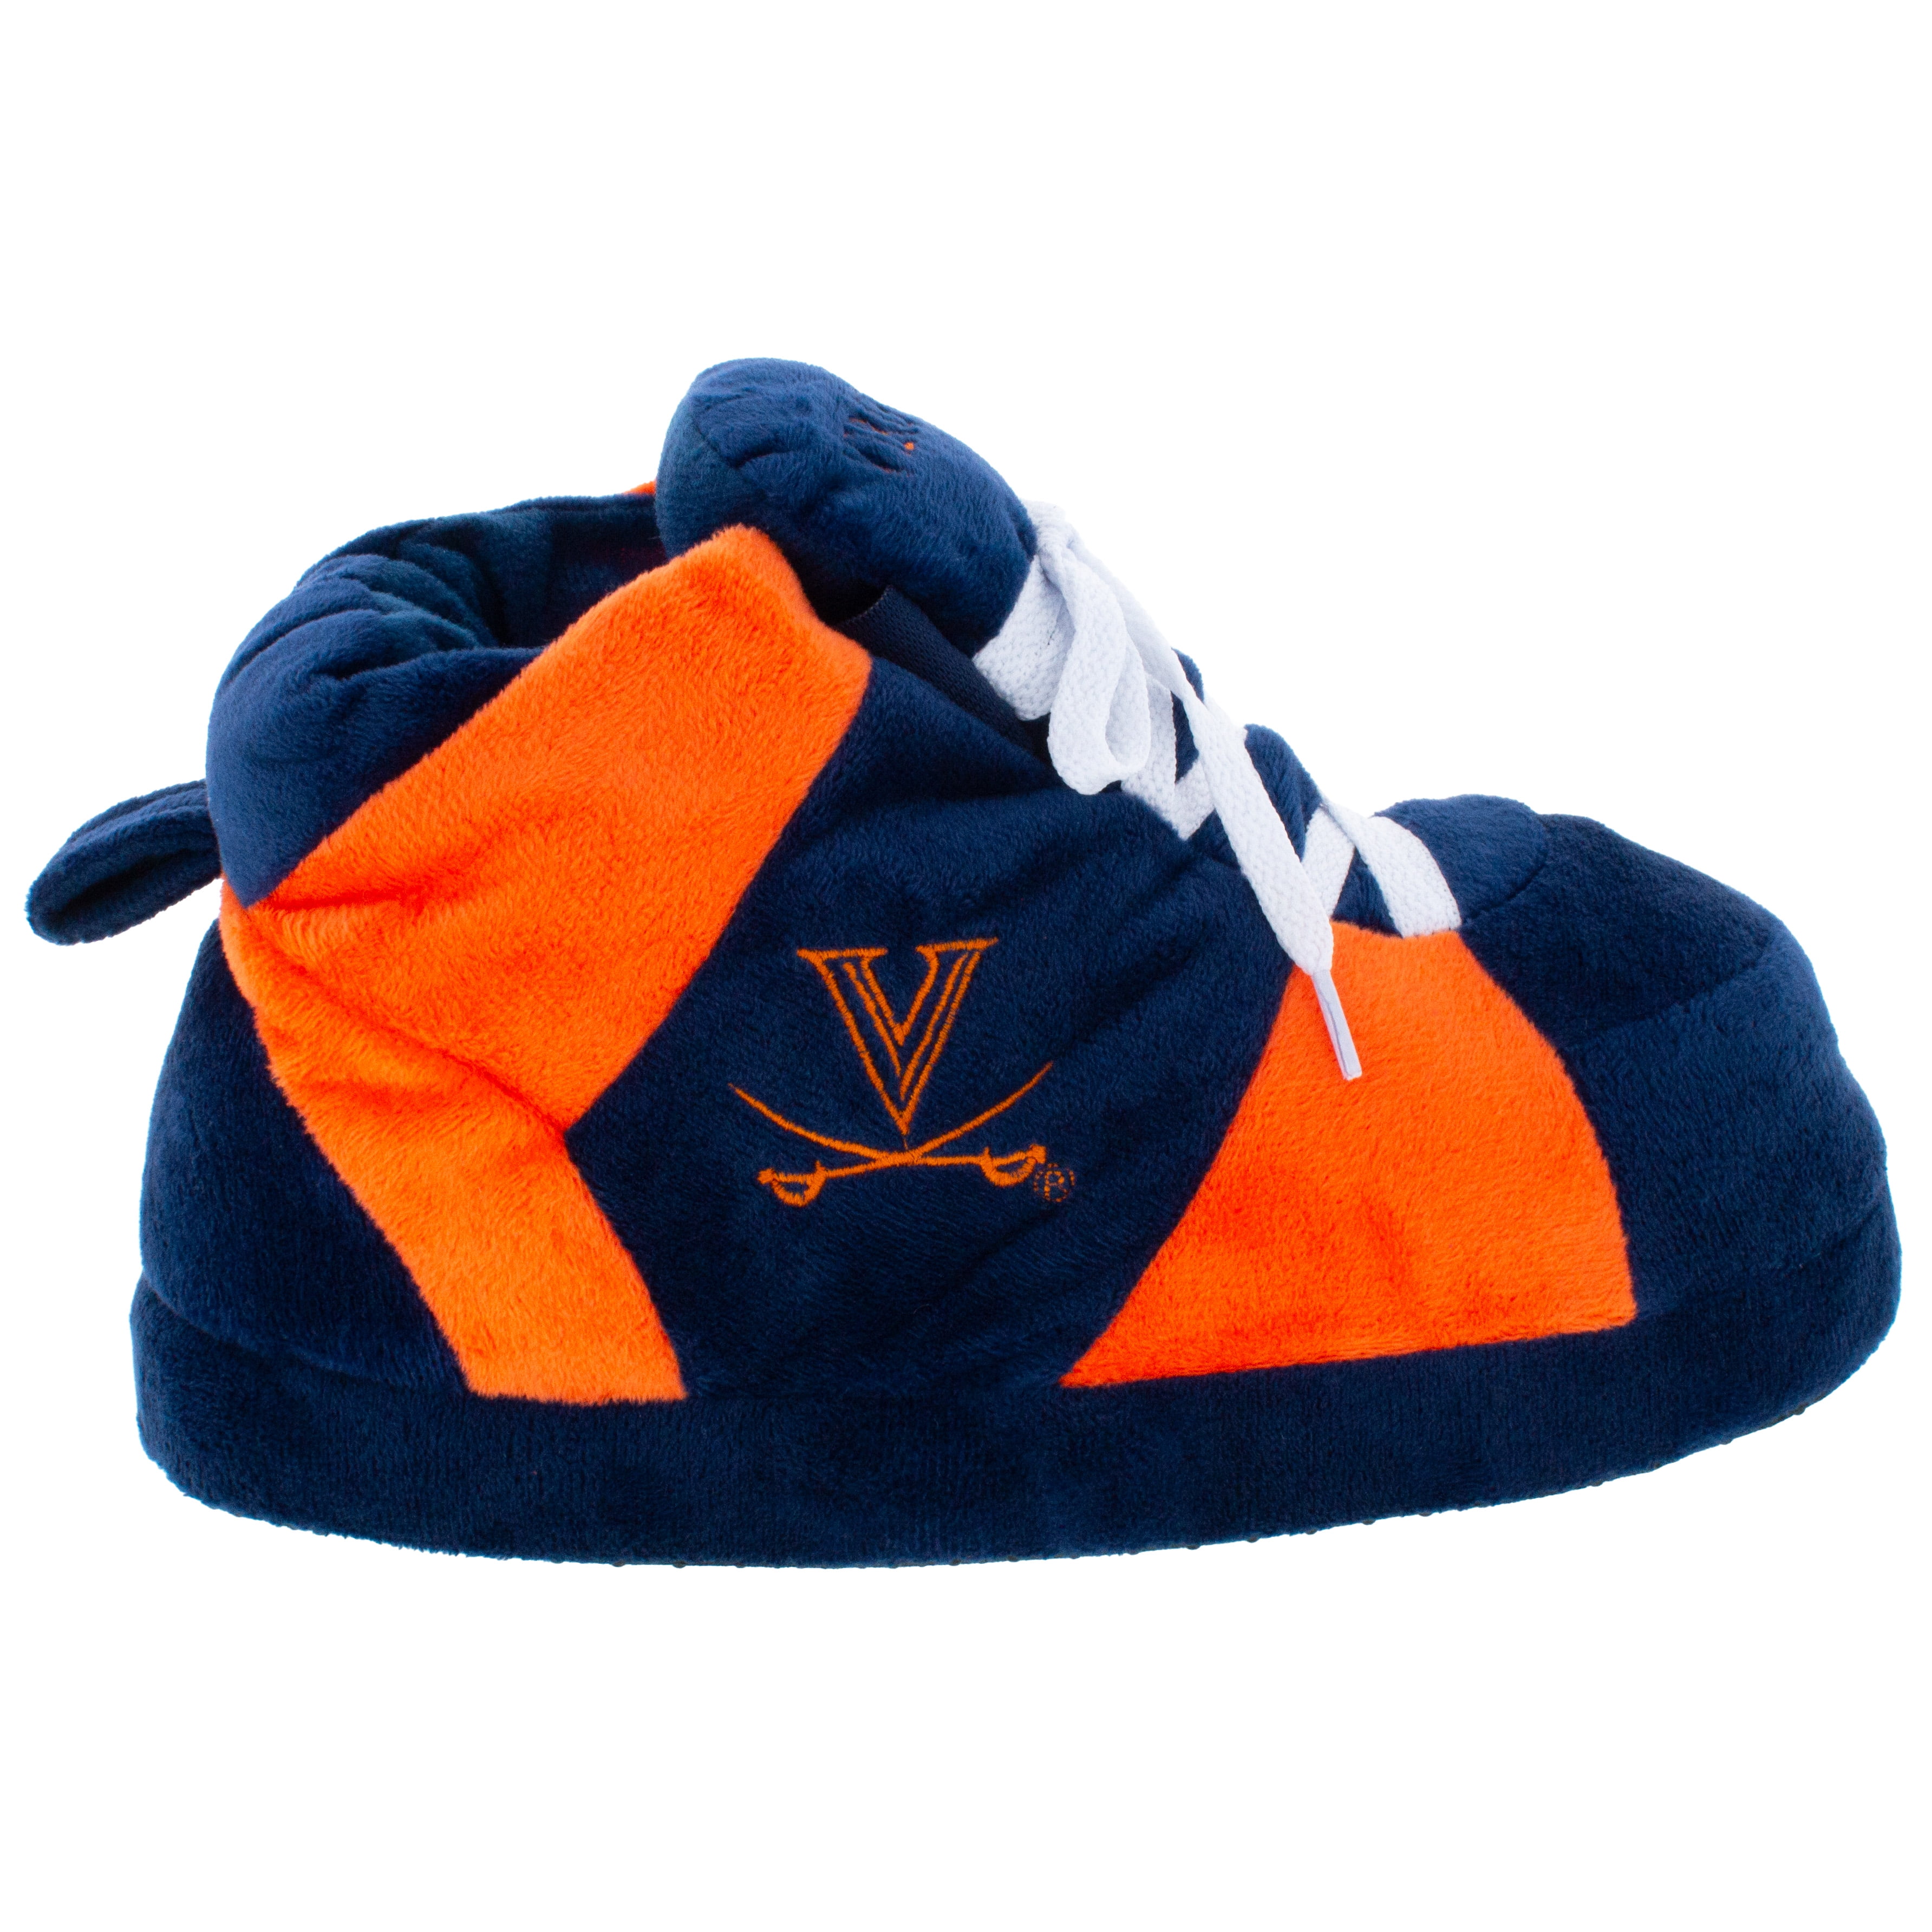 Large Feet Virginia Original Sneaker Cavaliers Comfy Slipper,